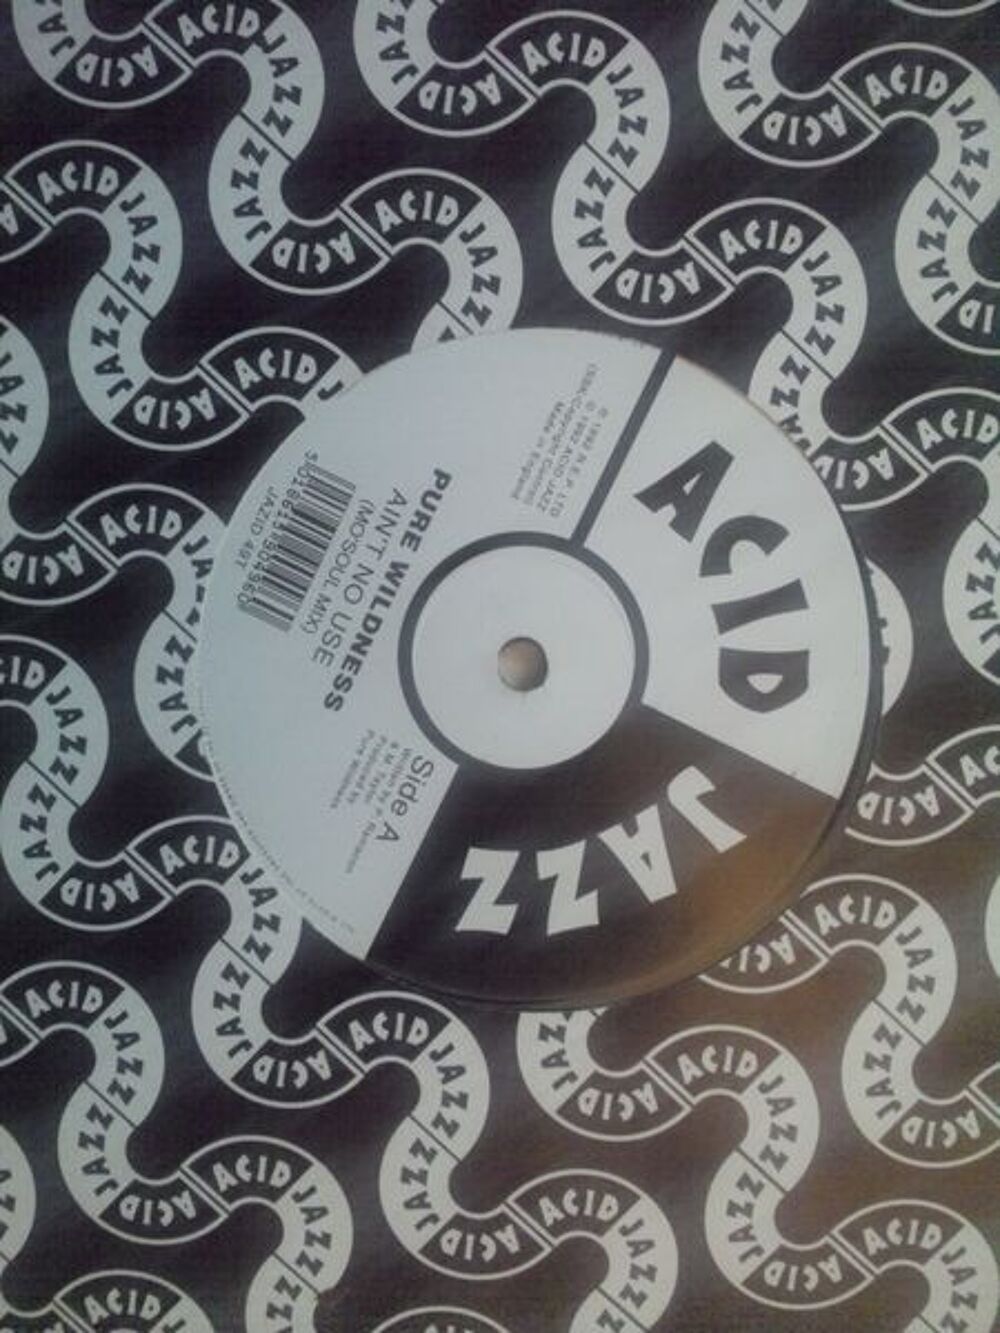 ACID JAZZ
PURE WILDNESS - AIN'T NO USE
VINYLE - IMPORT CD et vinyles